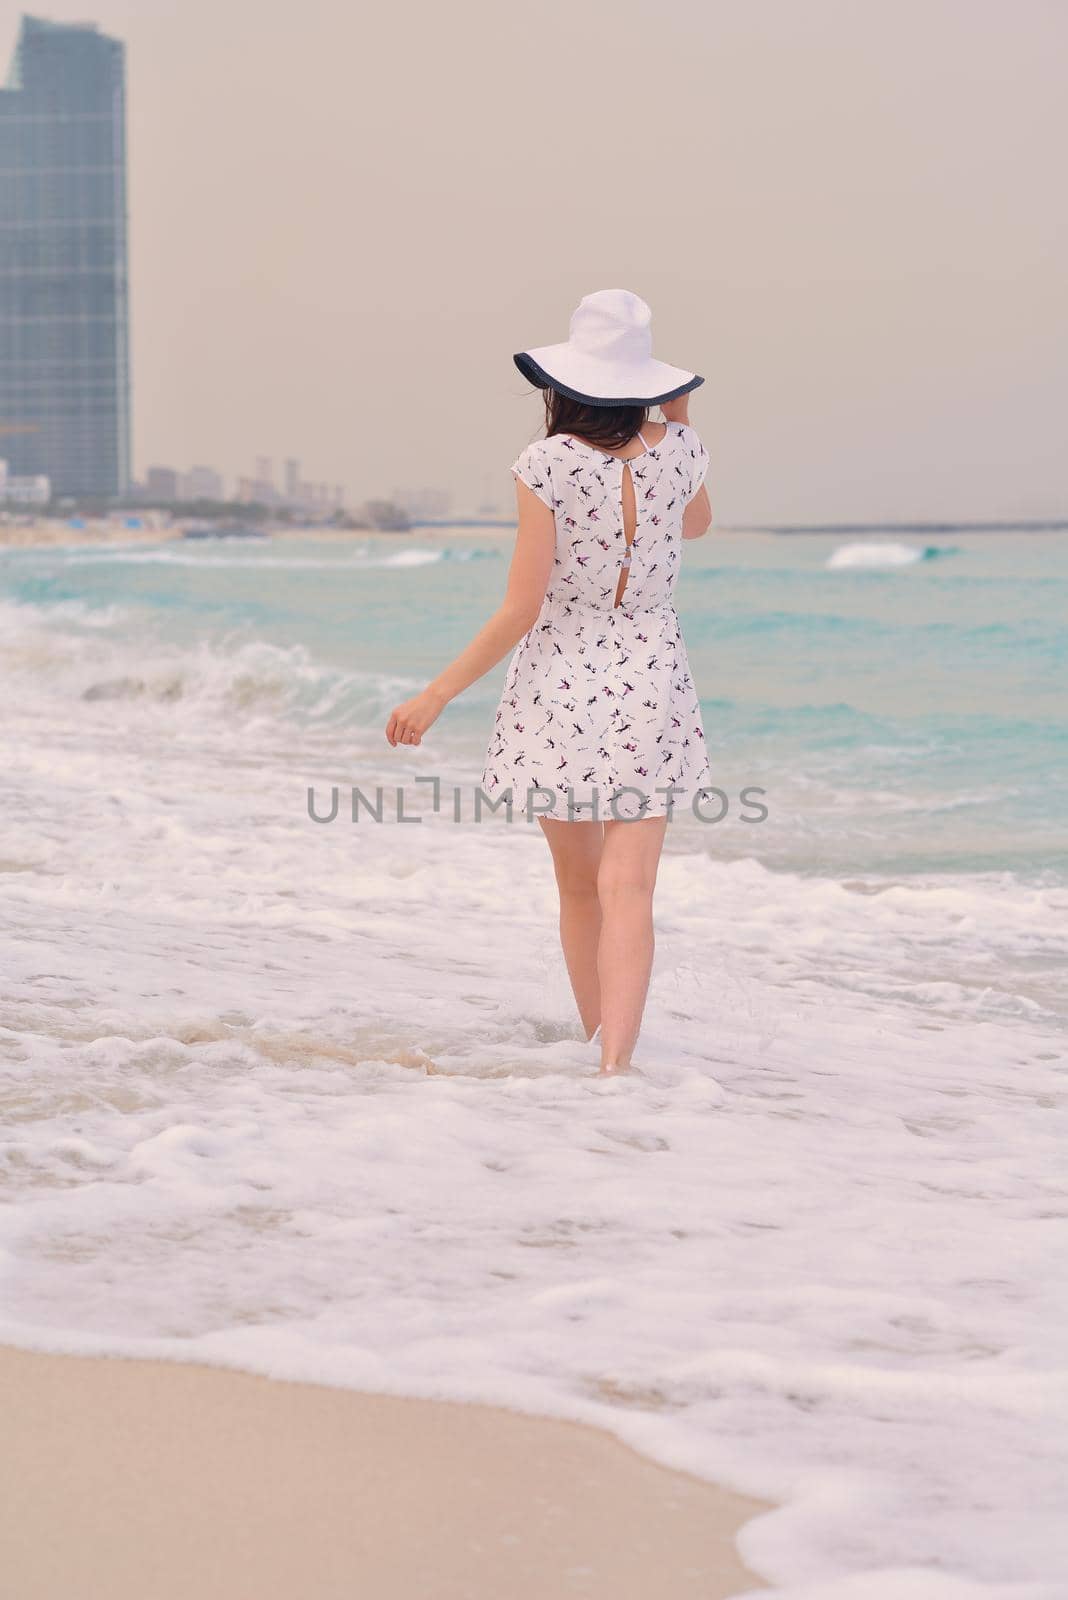 Happy Beautiful Woman Enjoying Summer Vacation on beach